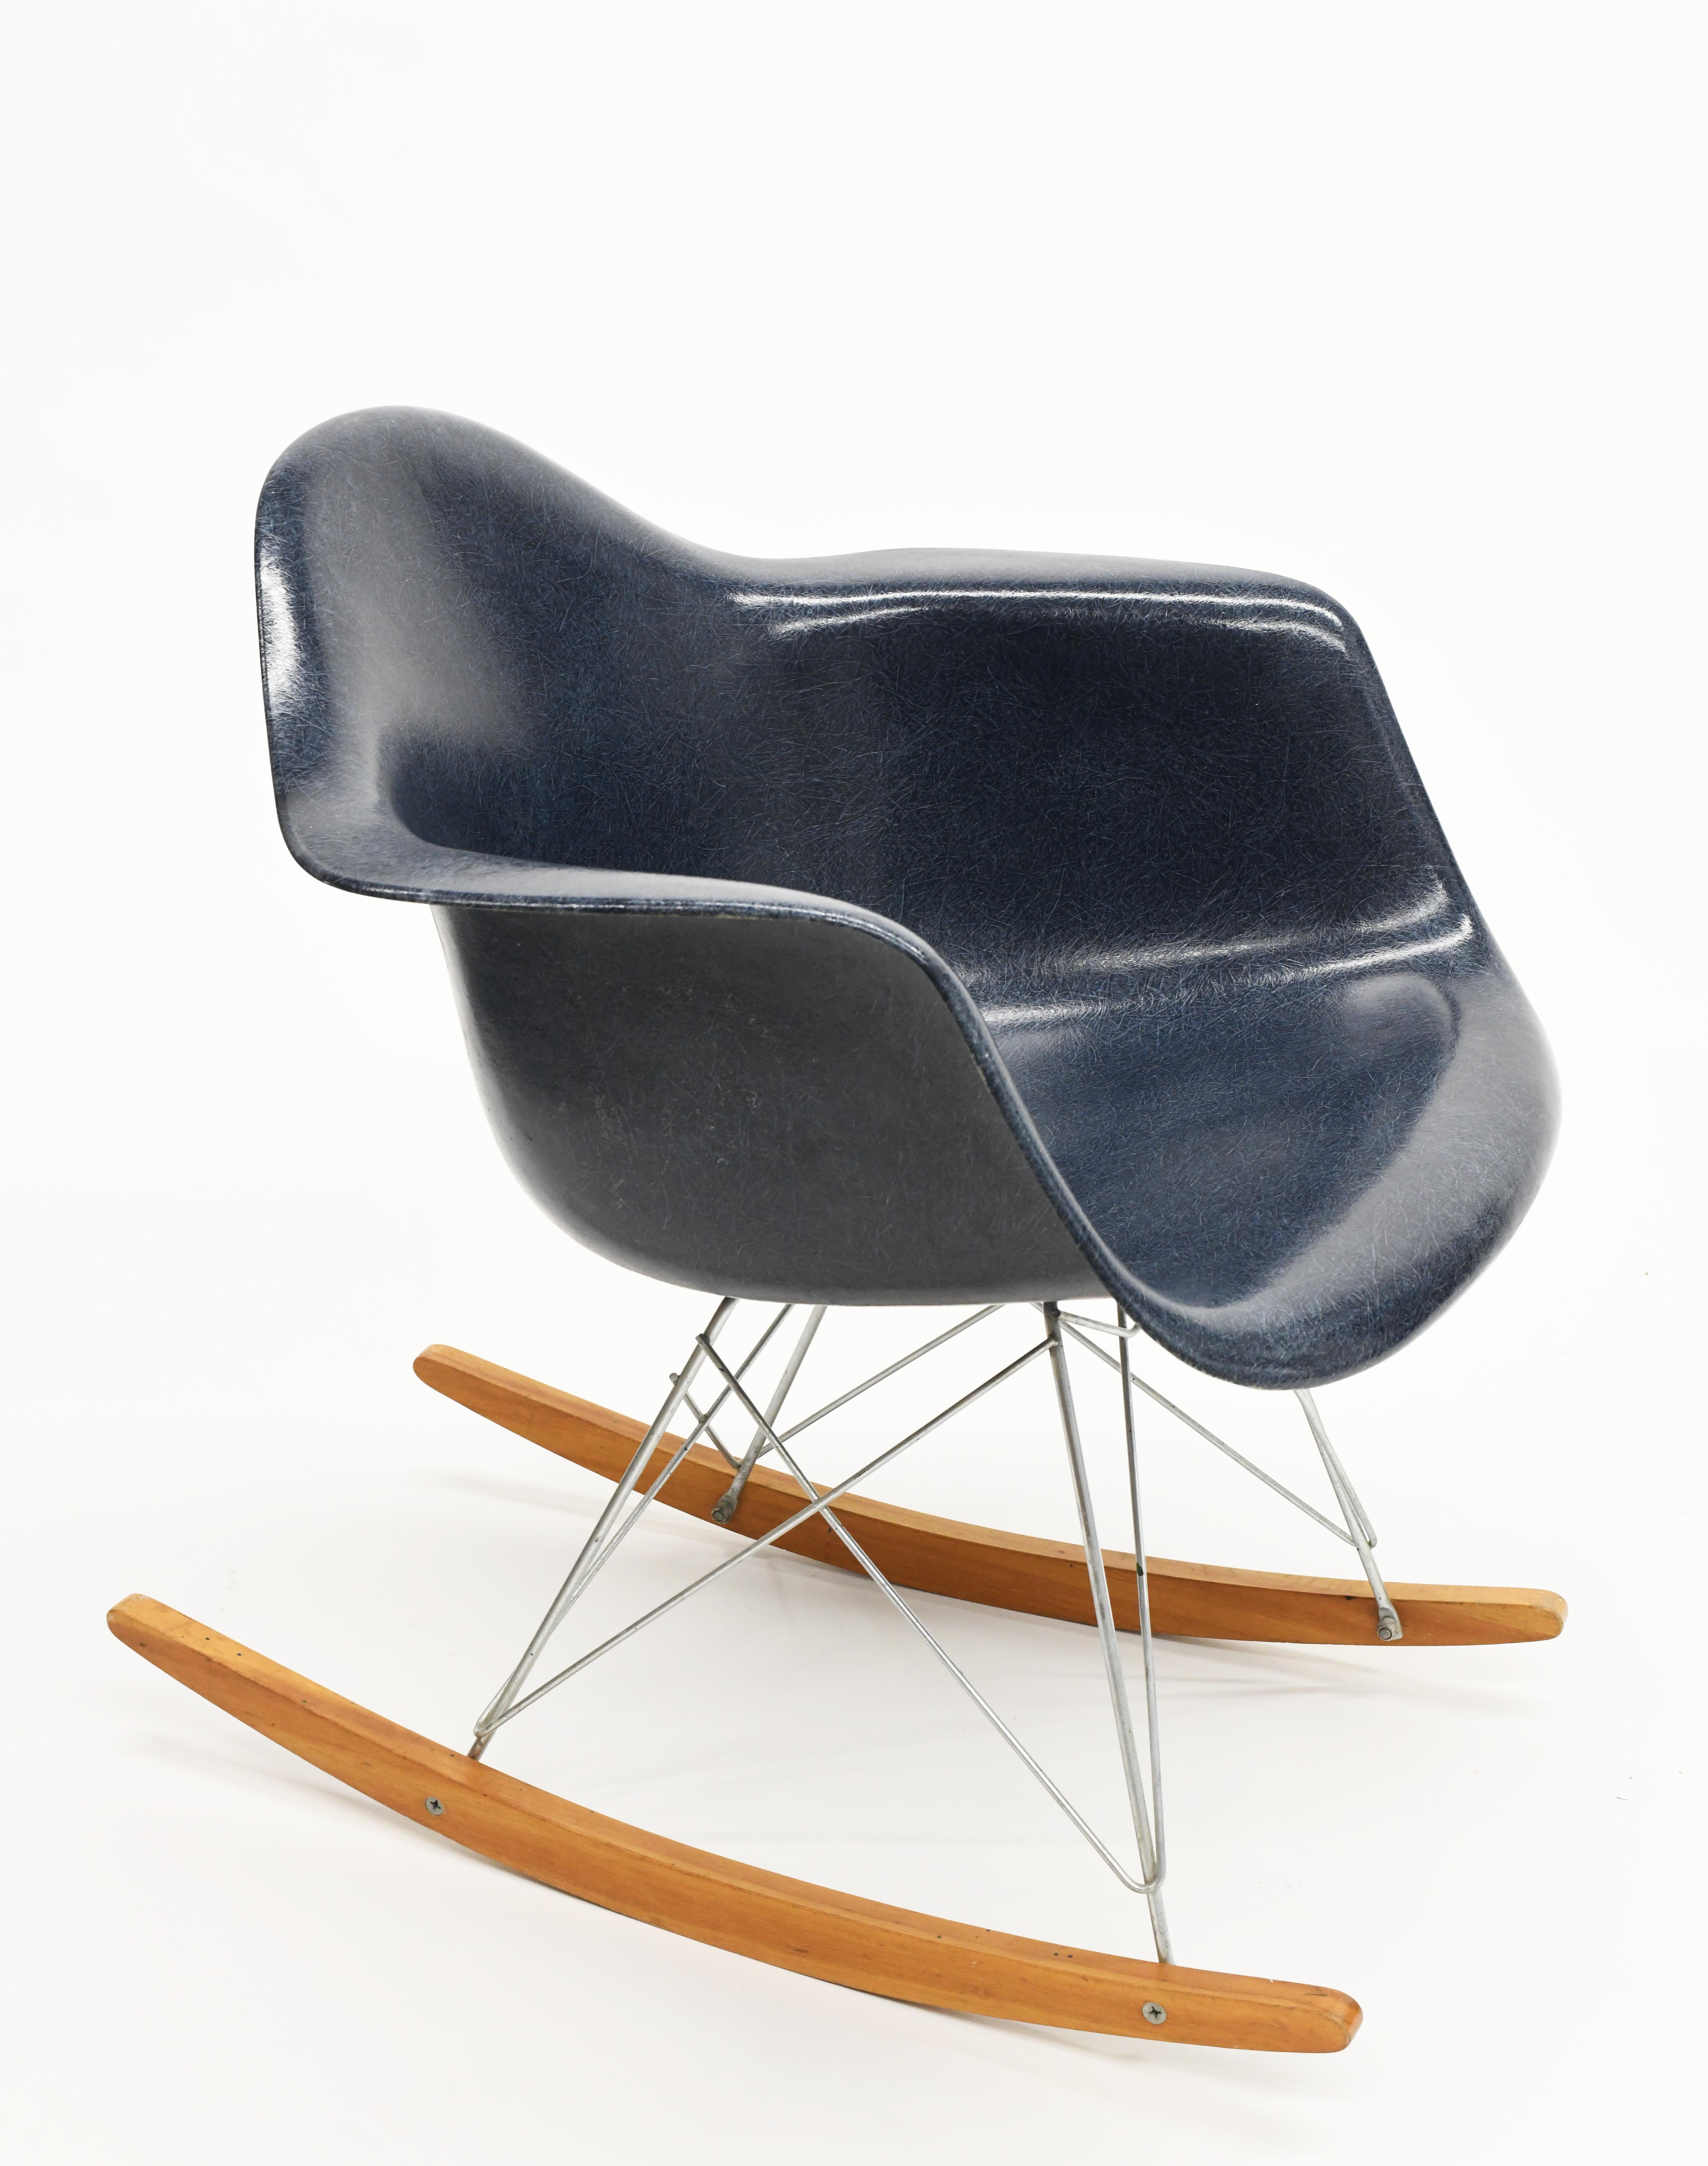 Mid-20th Century Original Herman Miller Eames Fiberglass RAR Rocking Chair in Navy Blue